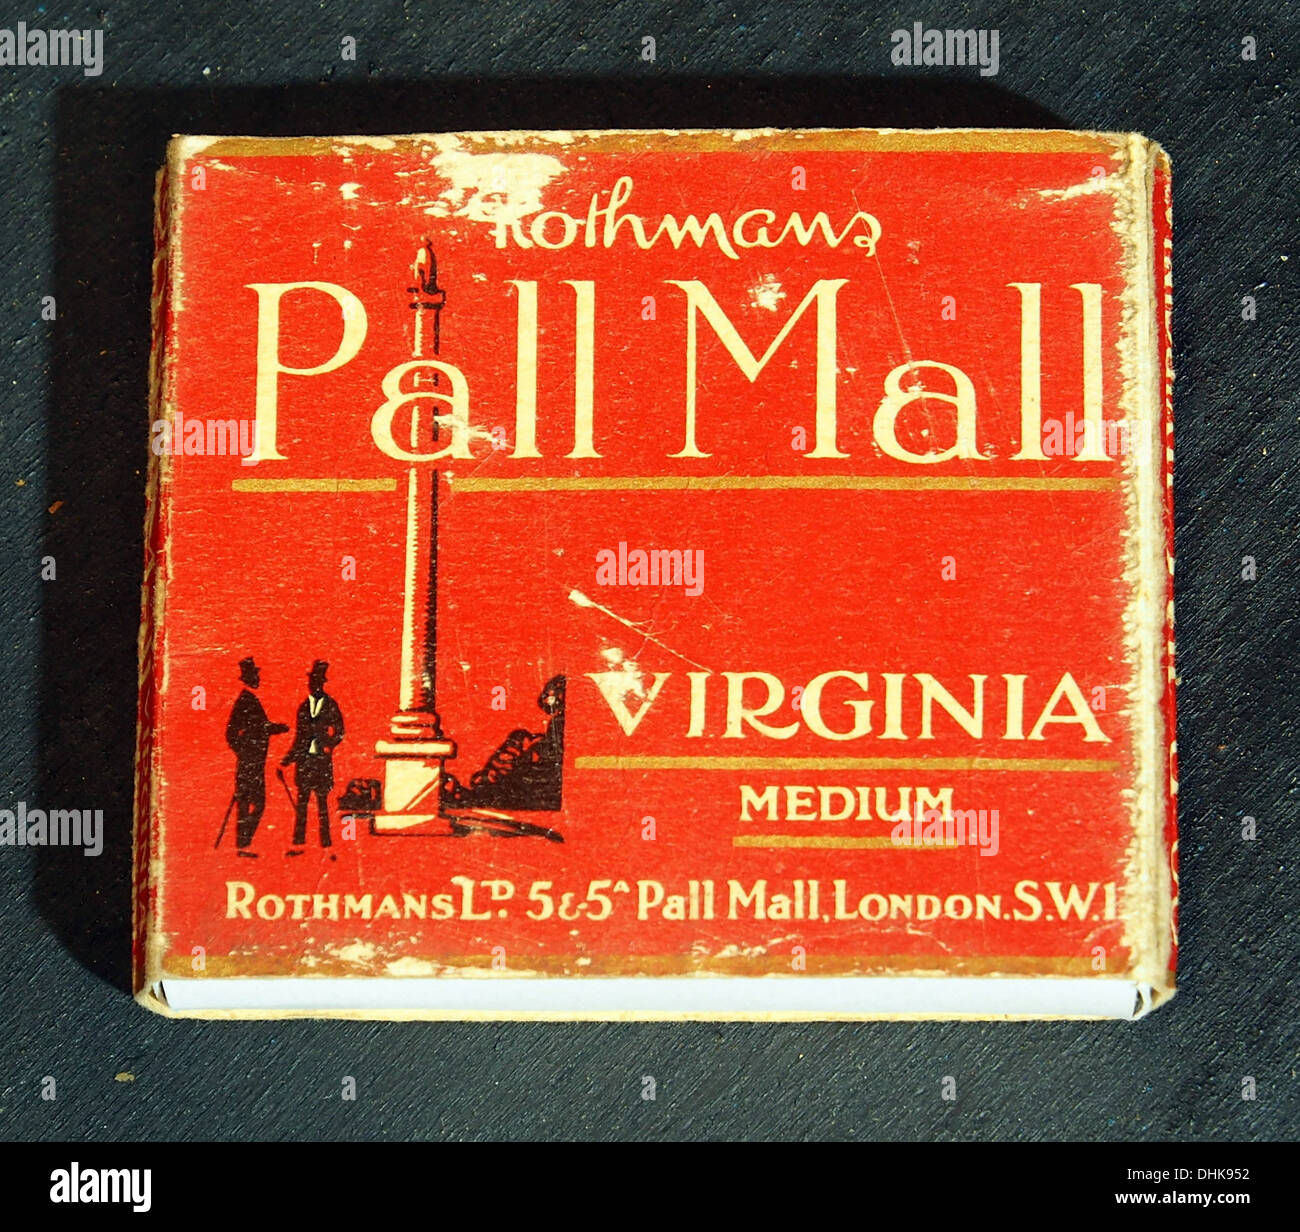 Rothmans Pall Mall Virginia medium cigarettes Stock Photo